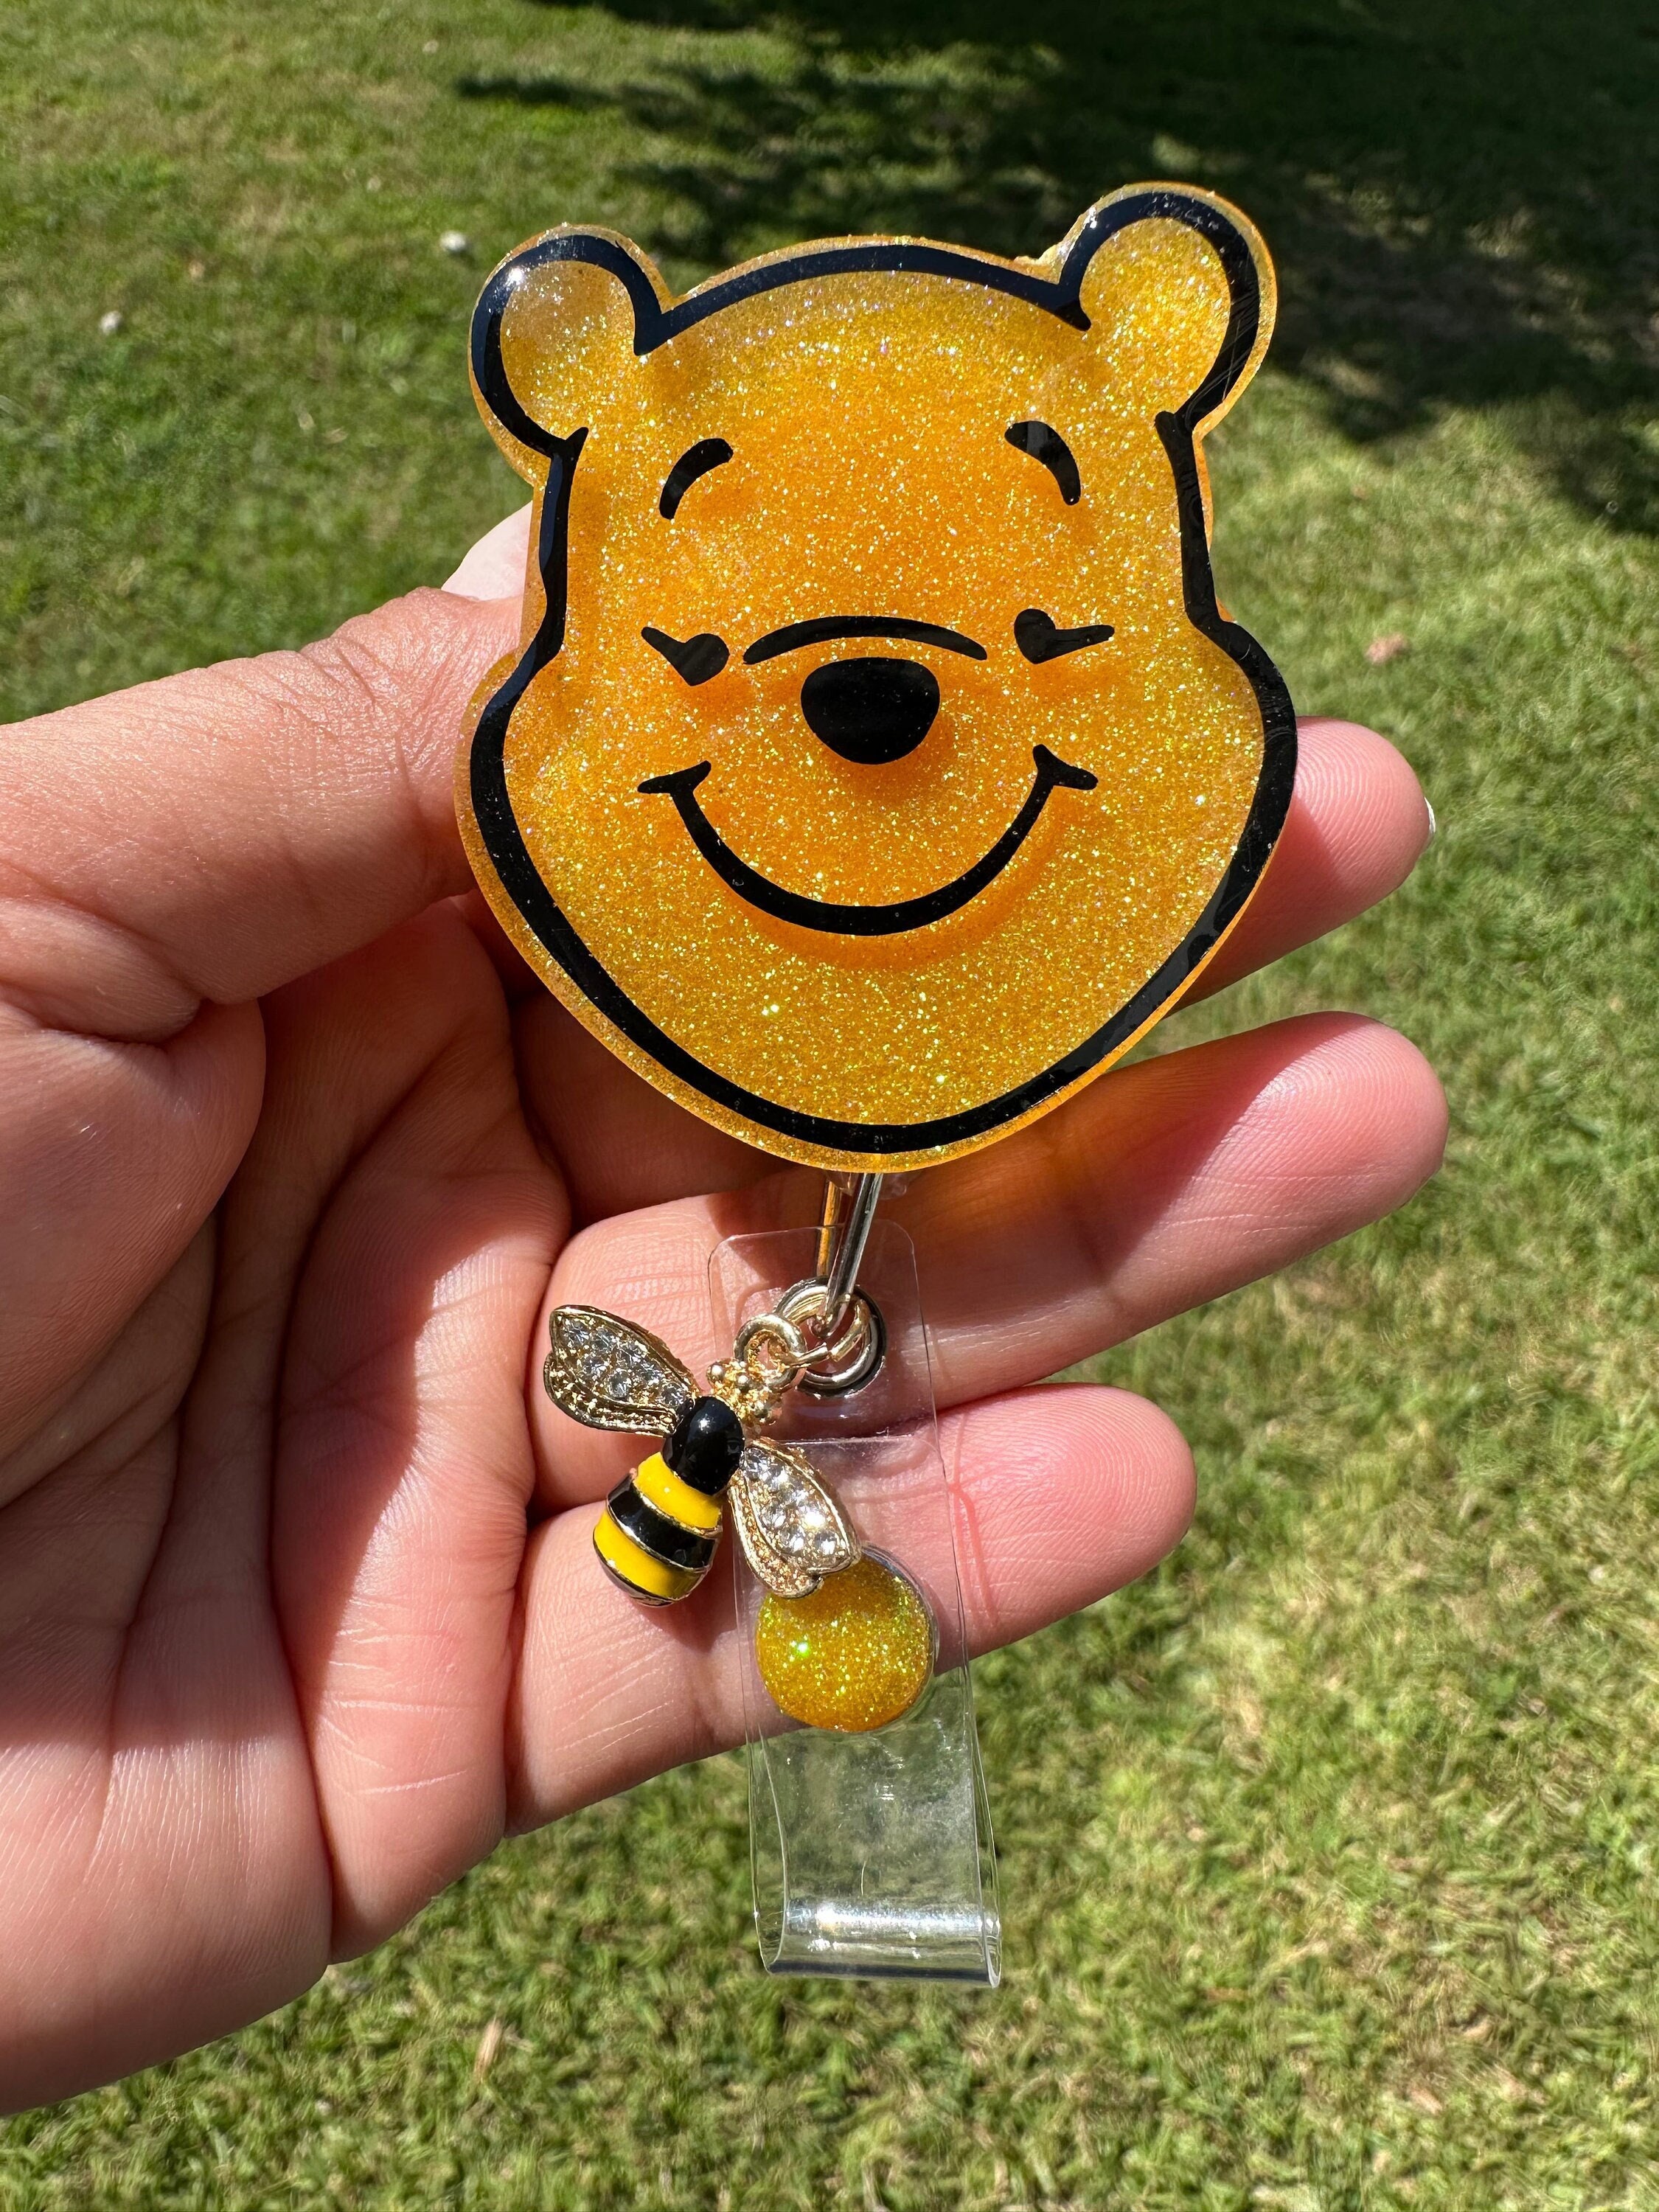 Disney Winnie The Pooh Retractable Id Card Badge Holder Alligator Clip - For  Nursing, School, Office : Target